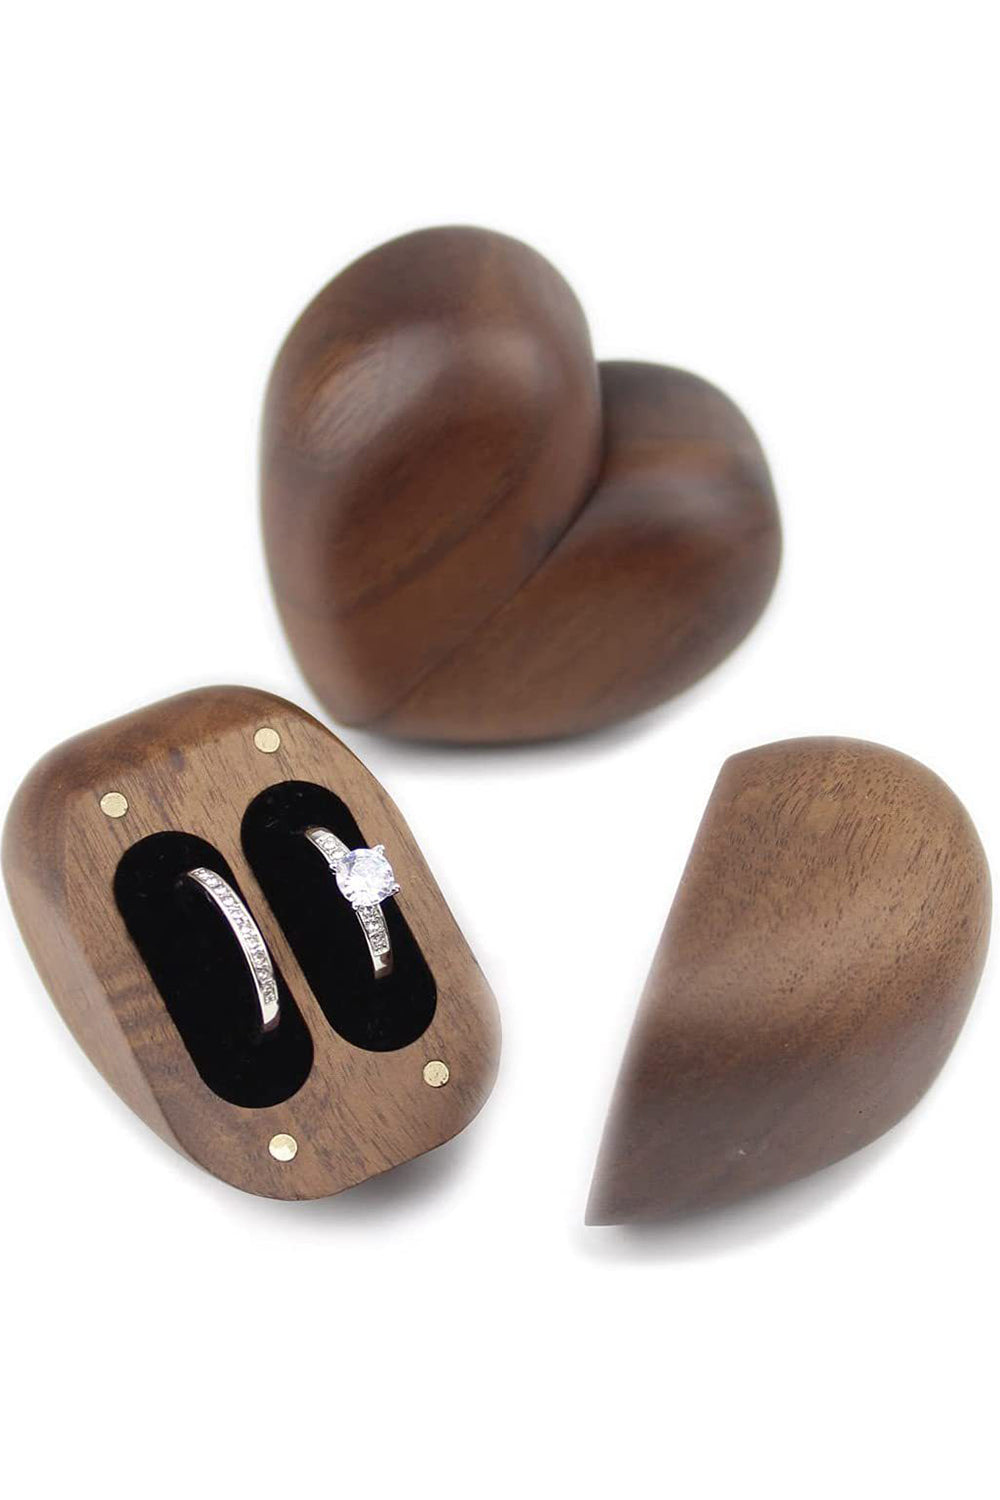 Caja de anillo de compromiso en forma de corazón de madera